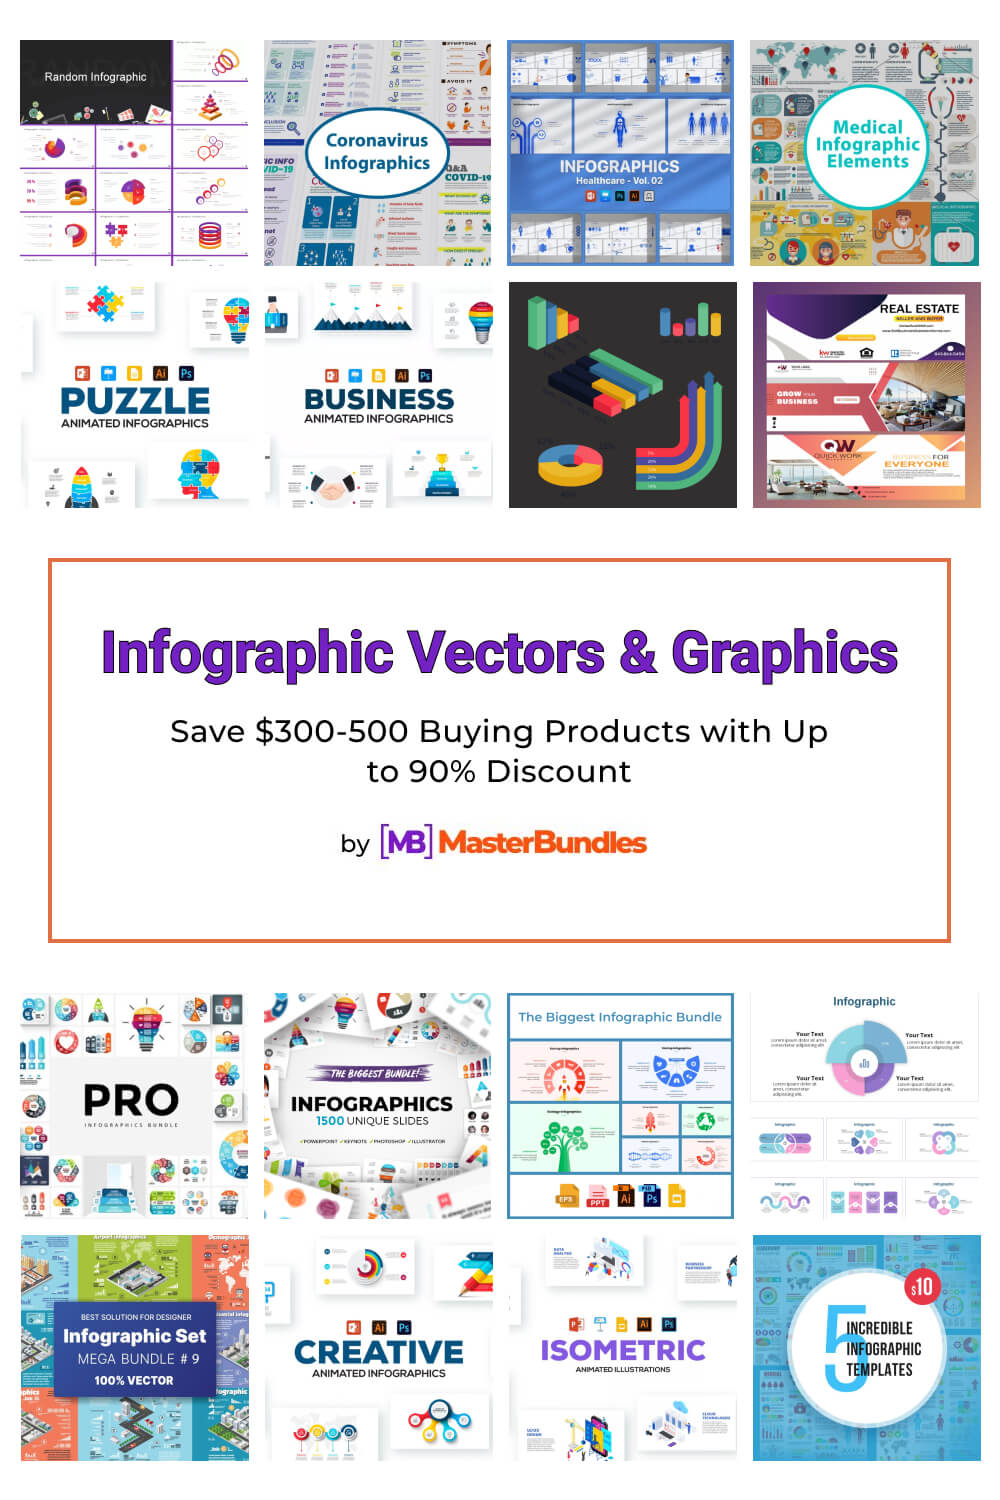 infographic vectors graphics pinterest image.